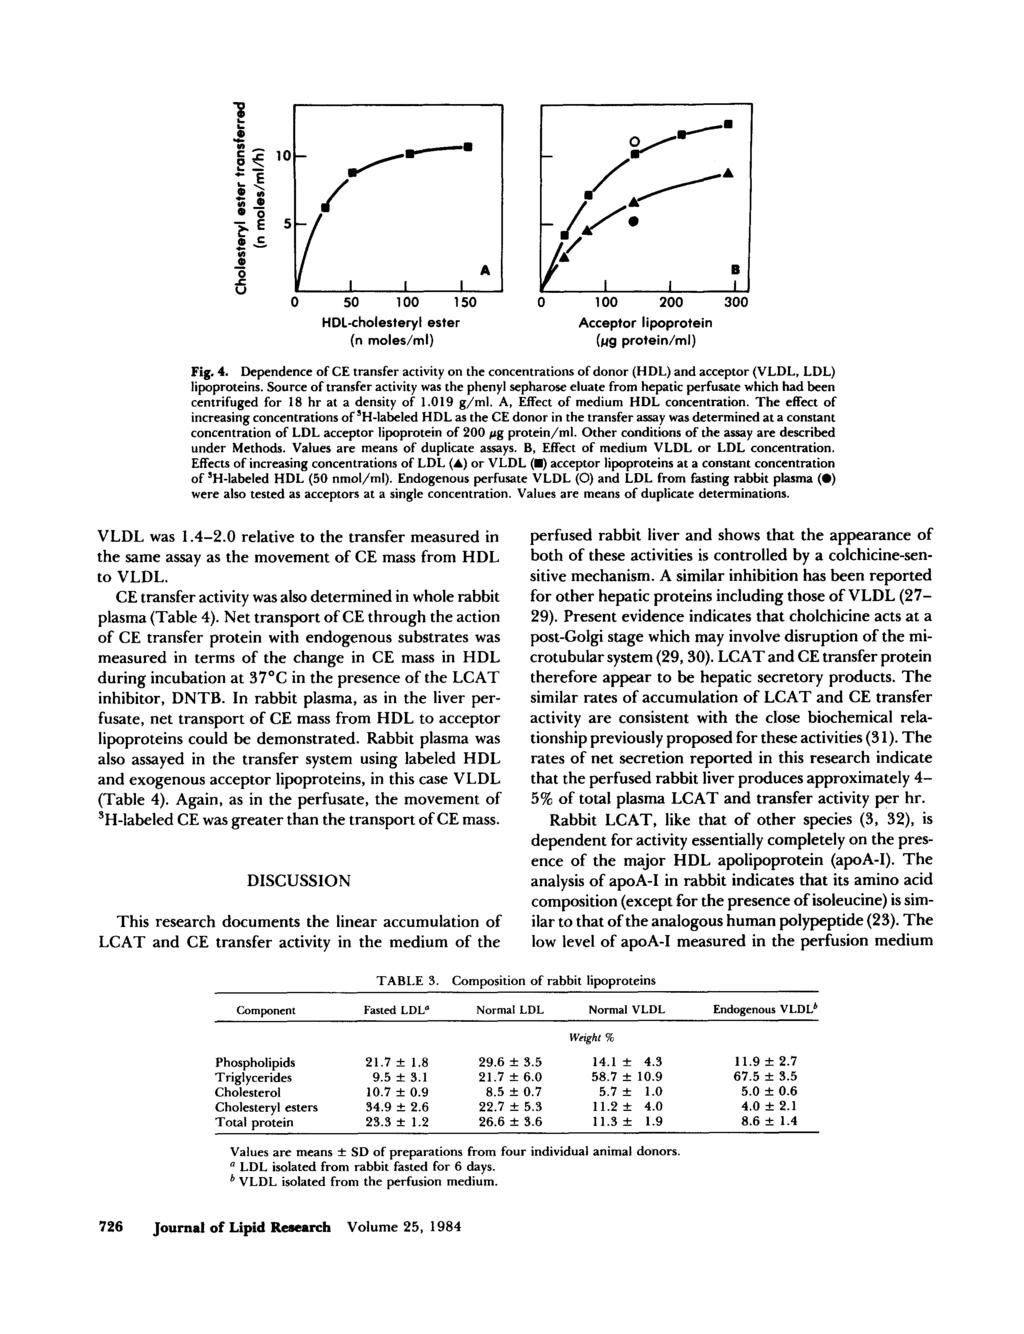 0 50 100 150 0 100 200 300 HDL-cholesteryl ester (n moles/ml) Acceptor lipoprotein (wg proteidml) Fig. 4.